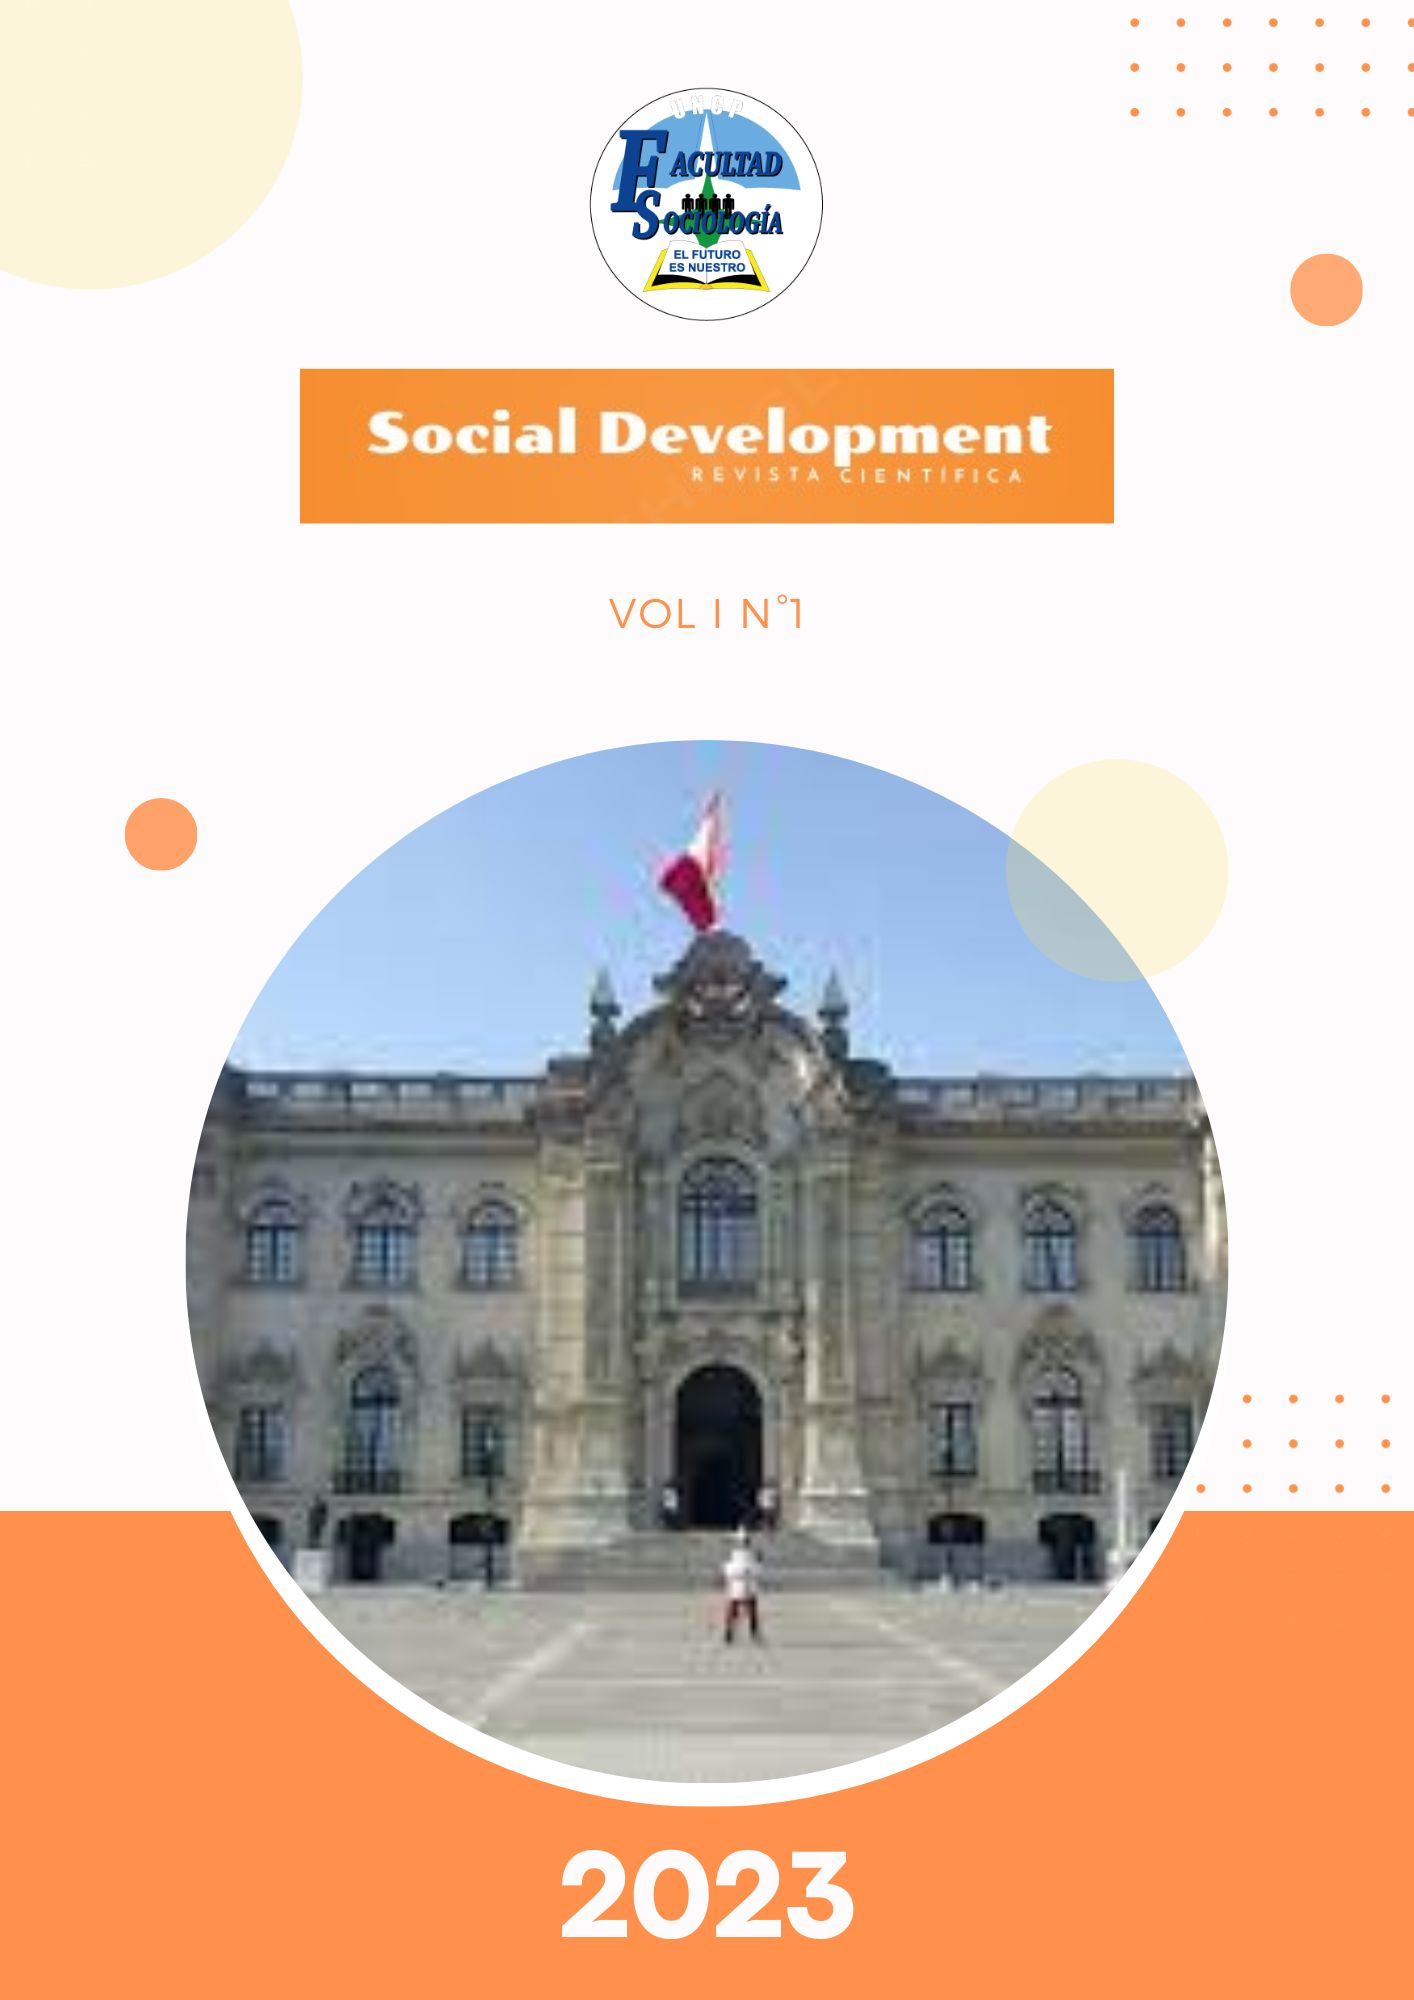 					Ver Vol. 1 Núm. 1 (2023): Social Development
				